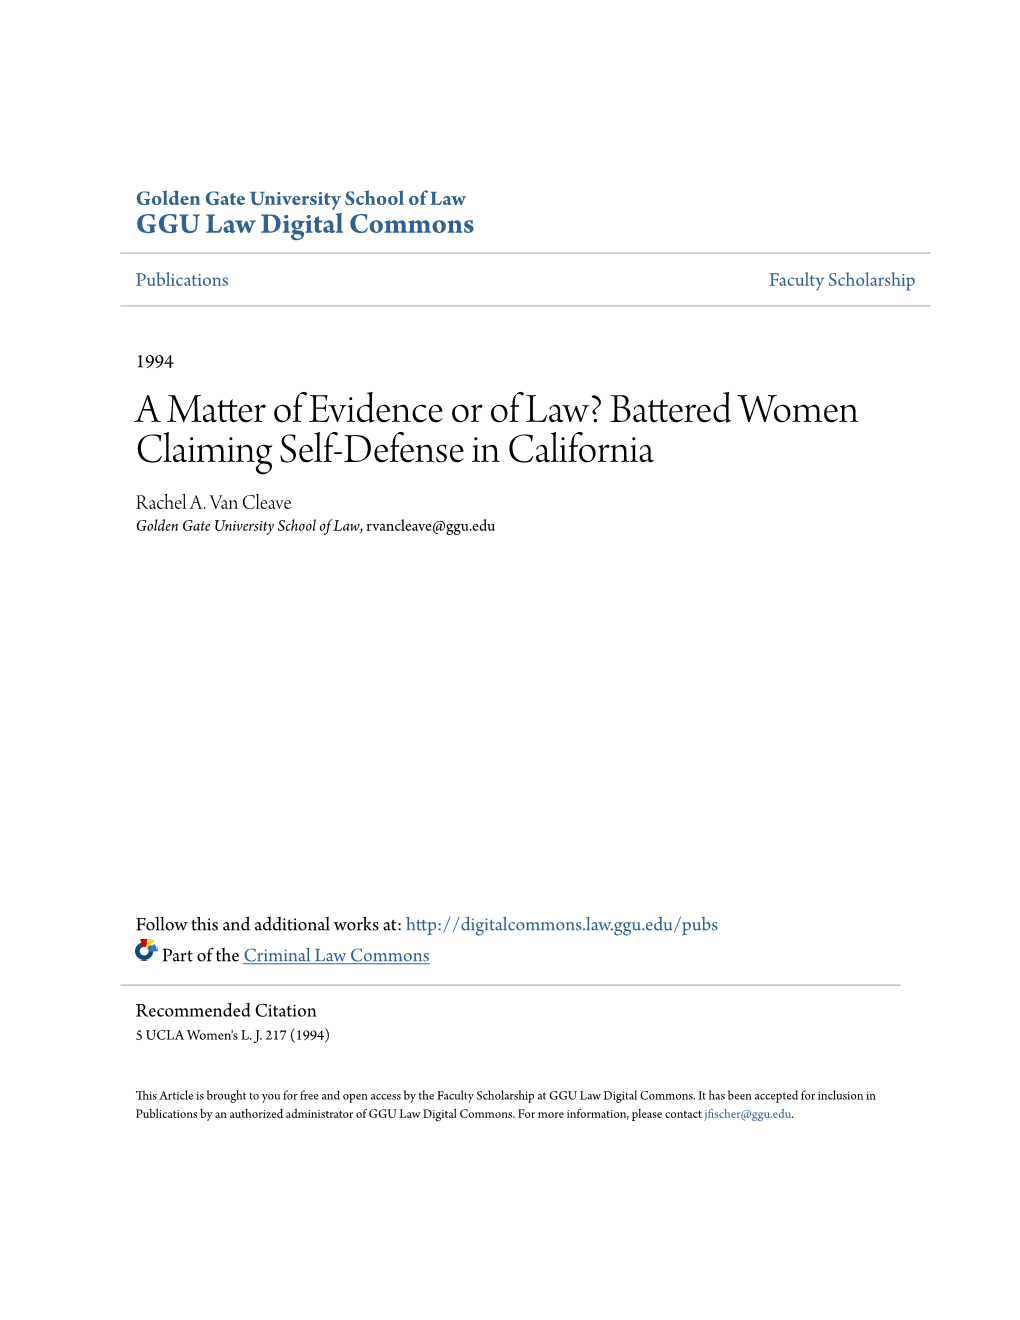 Battered Women Claiming Self-Defense in California Rachel A